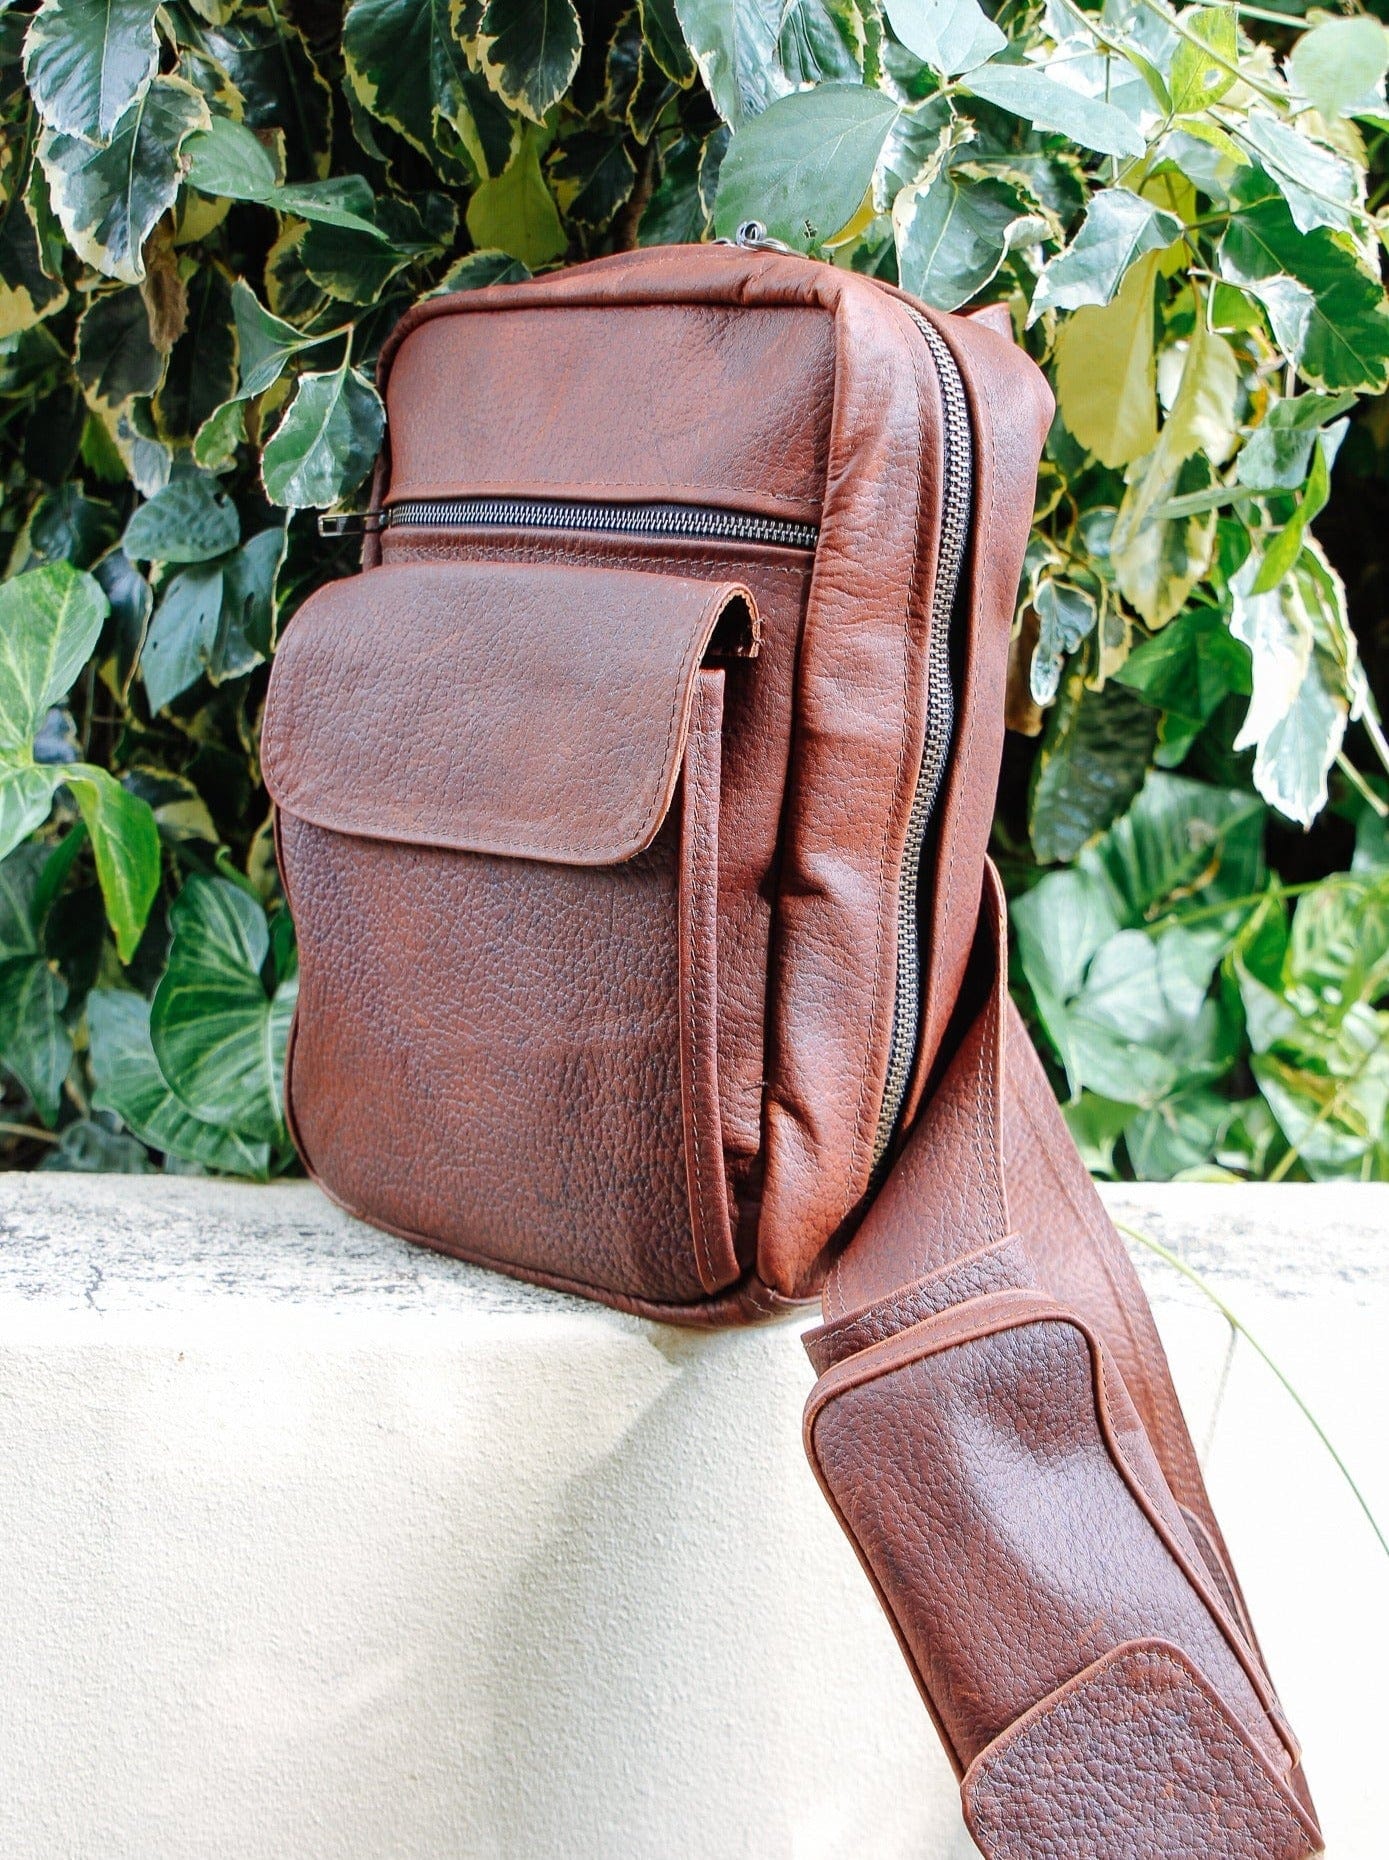 The Real McCaul Back Packs Kangaroo / Burgundy Brown / Brass Crossover Backpack - Medium - Kangaroo Australian Made Australian Owned Leather ManBag Crossover Backpack Australian Made